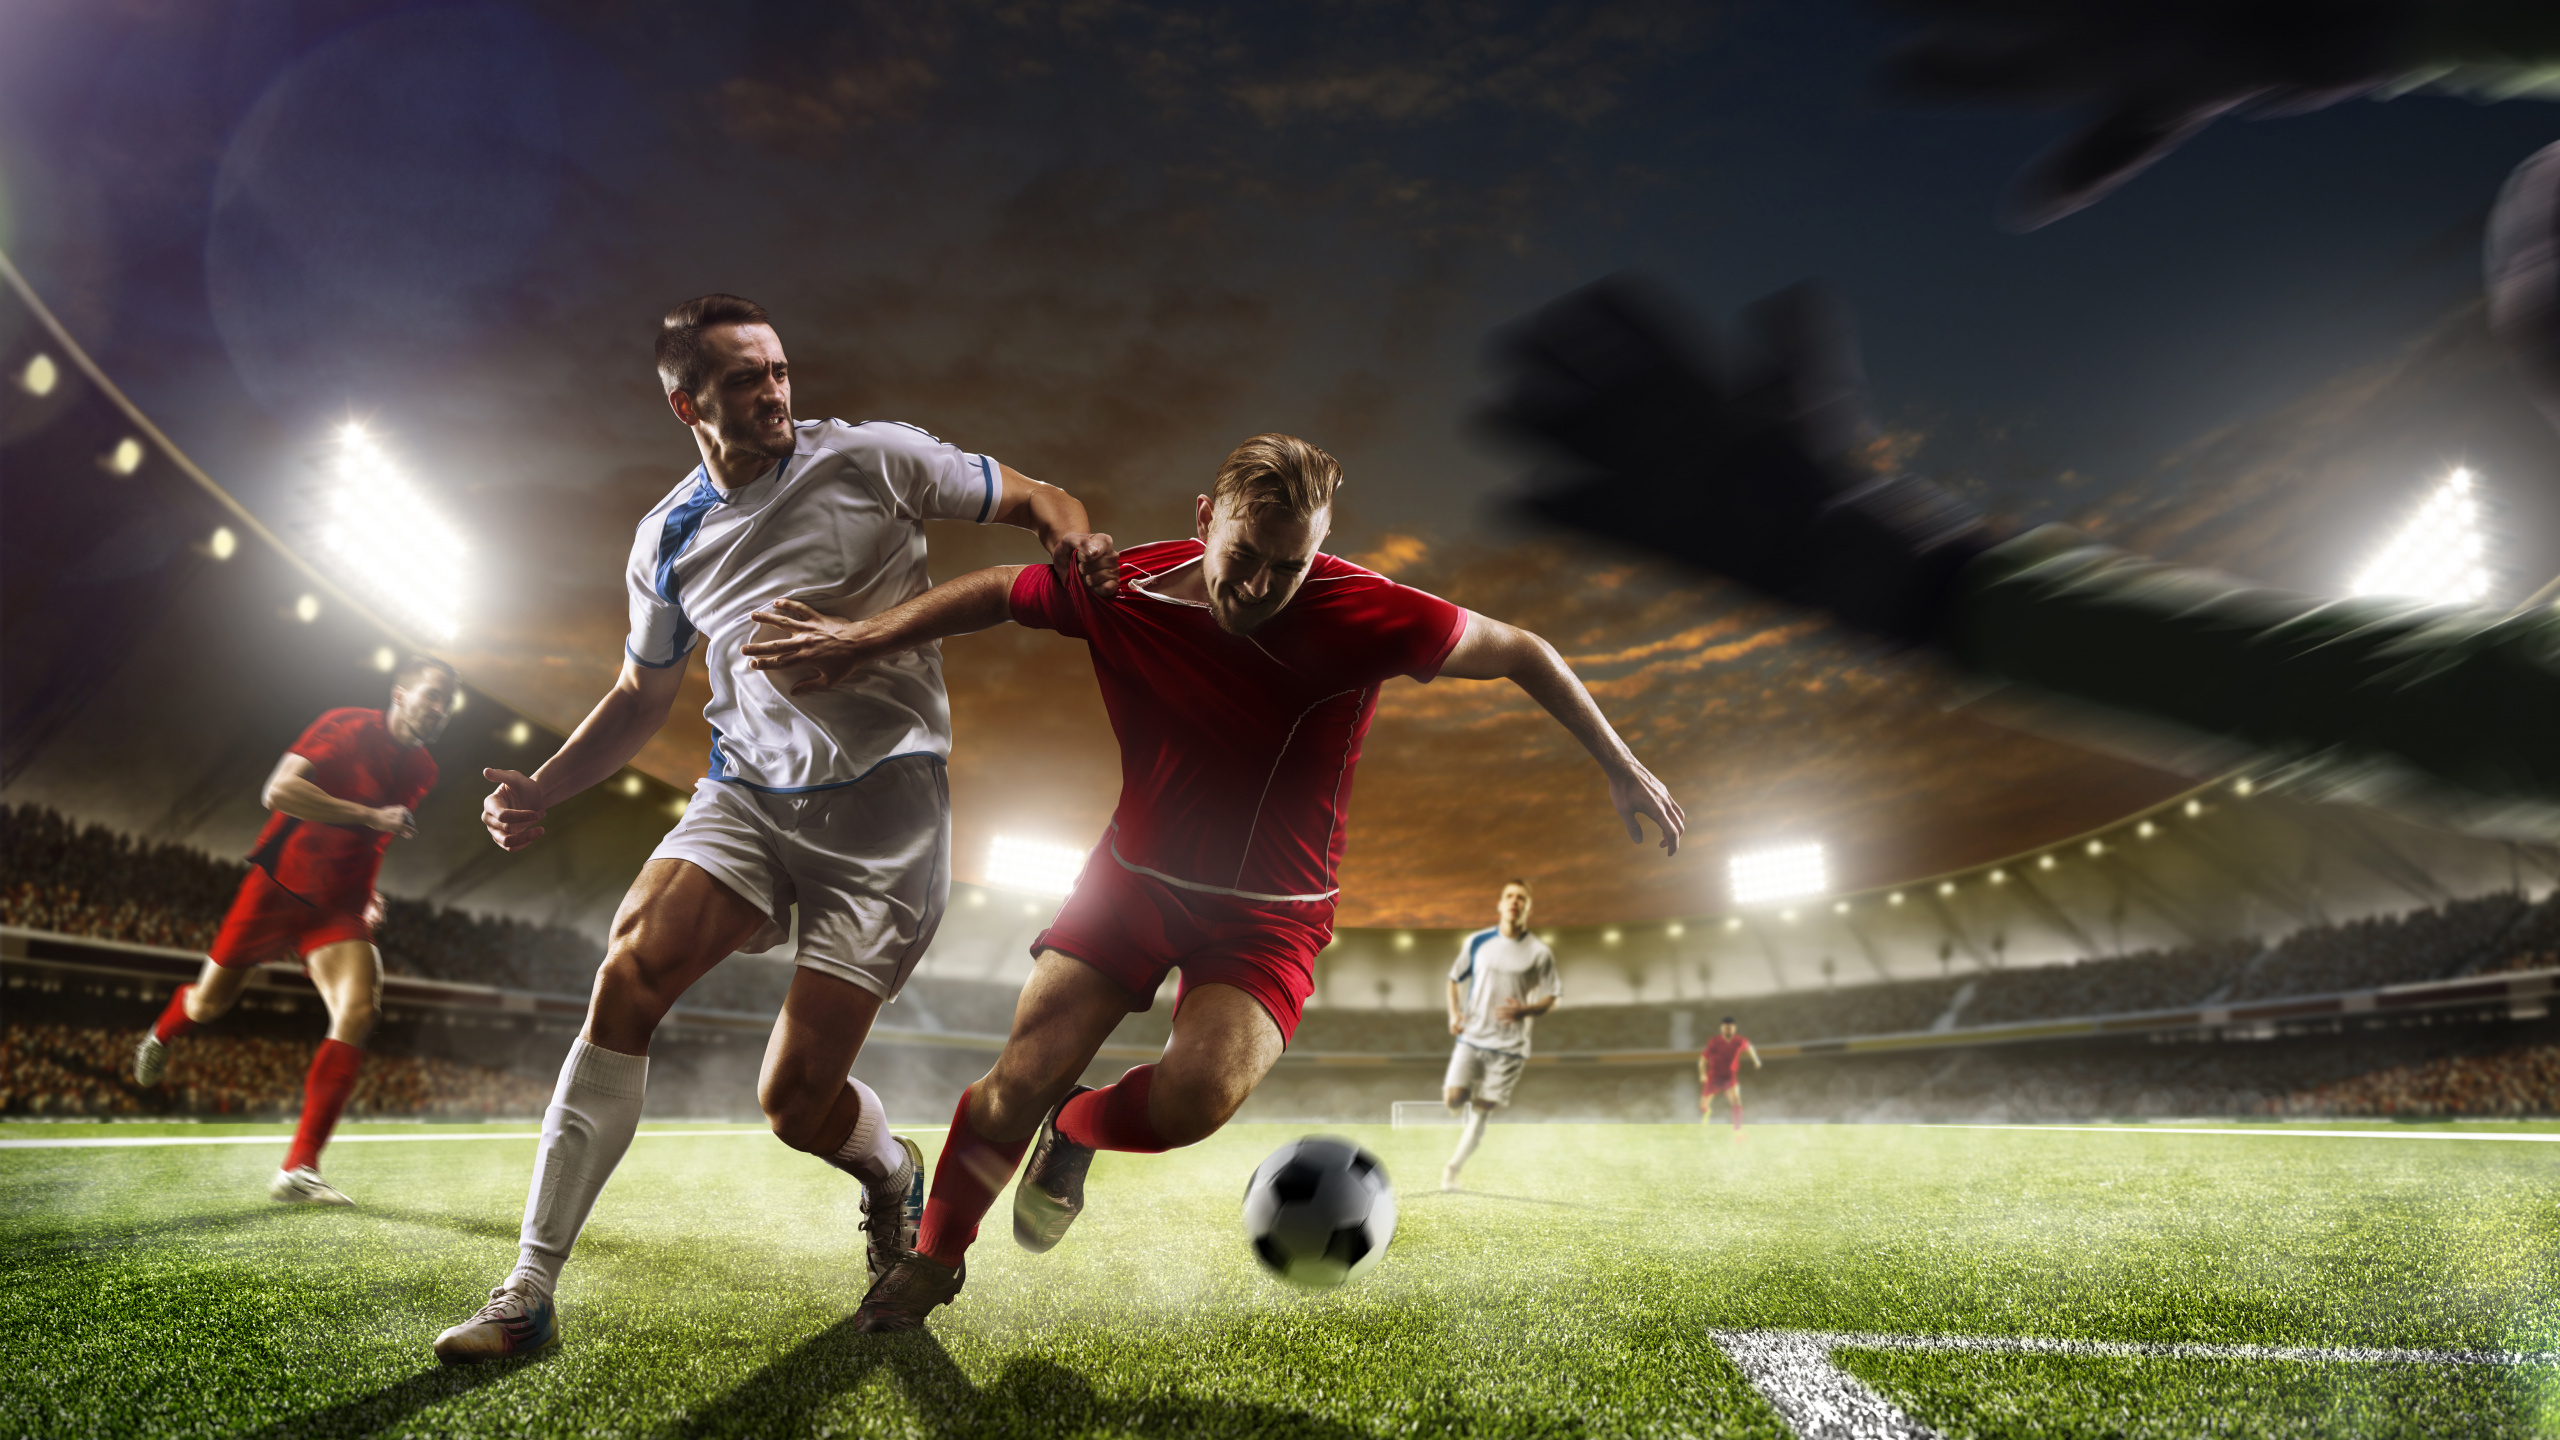 2 Hommes Jouant au Football Sur Terrain en Herbe Verte Pendant la Nuit. Wallpaper in 2560x1440 Resolution